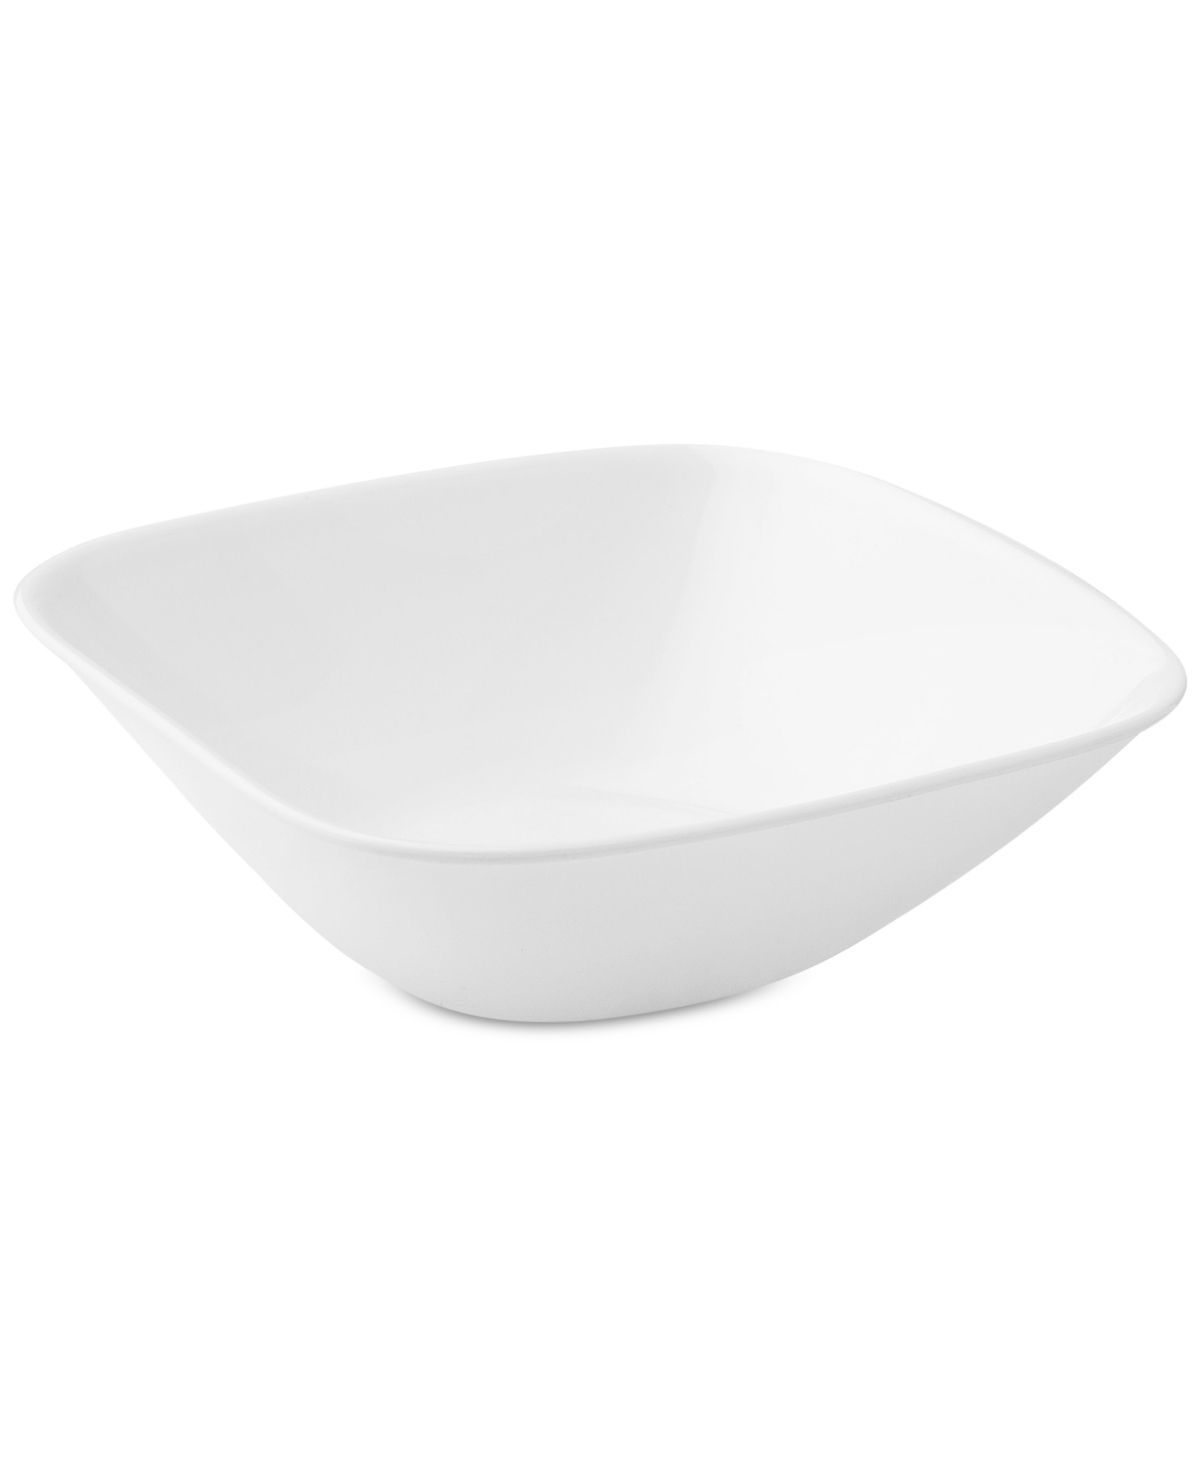 Square Pure White Bowl - White